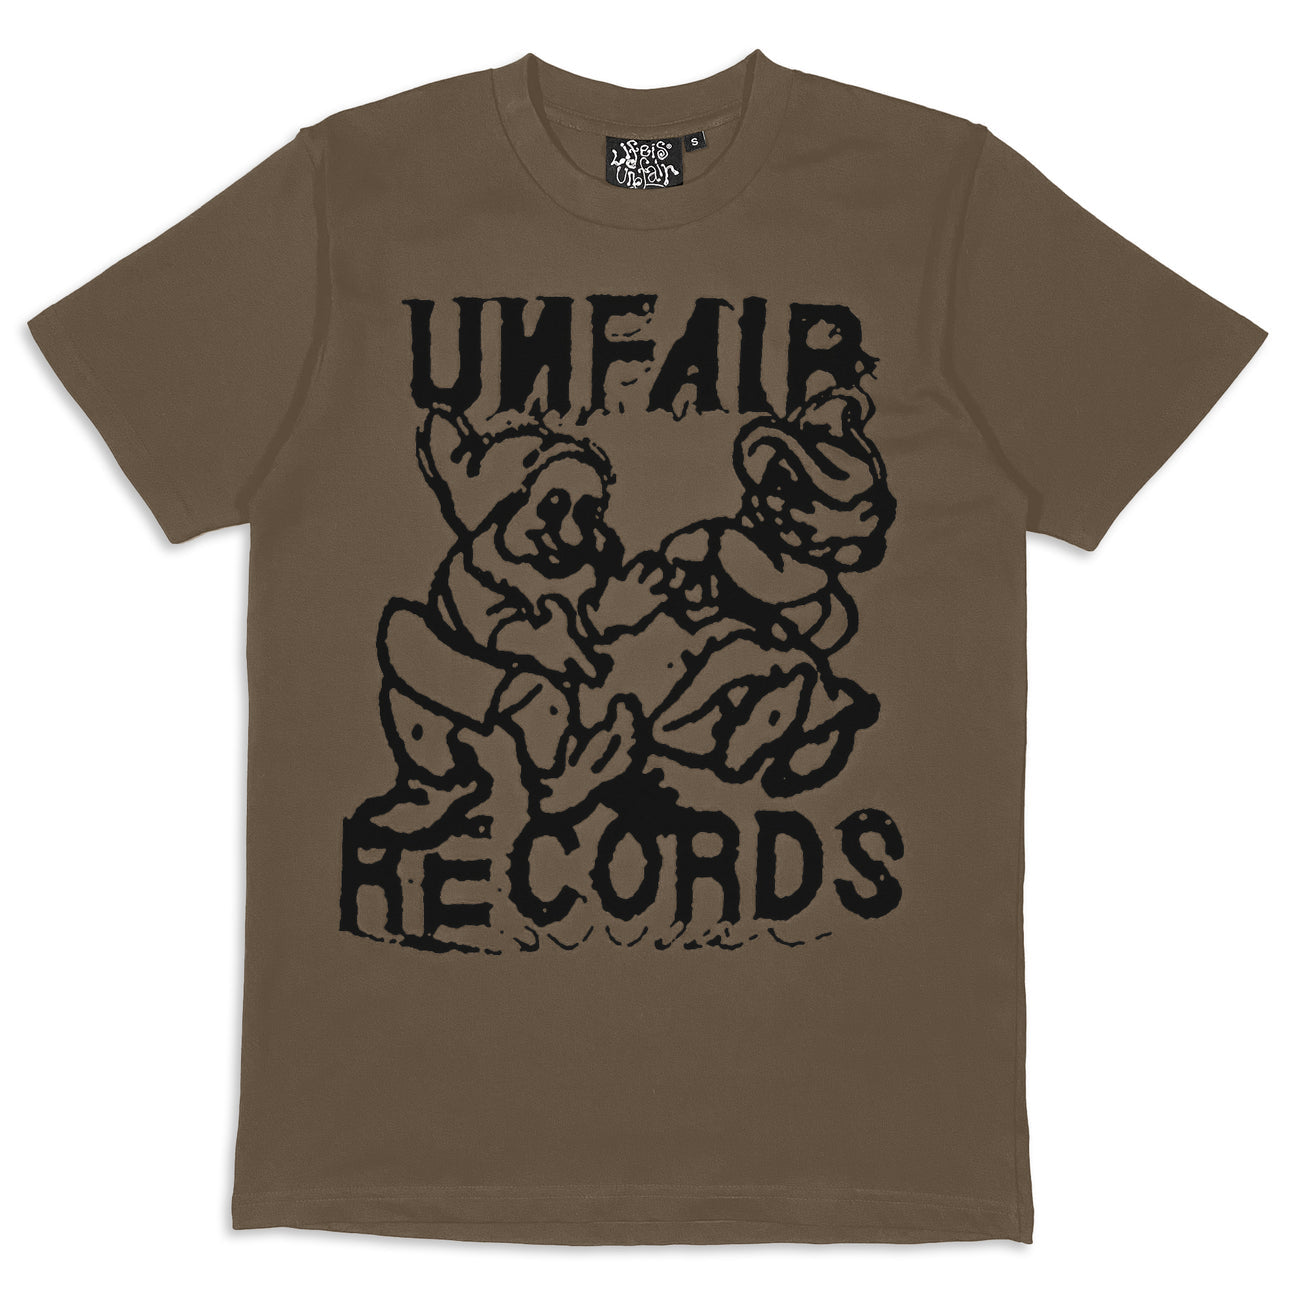 Life Is Unfair Records T-Shirt